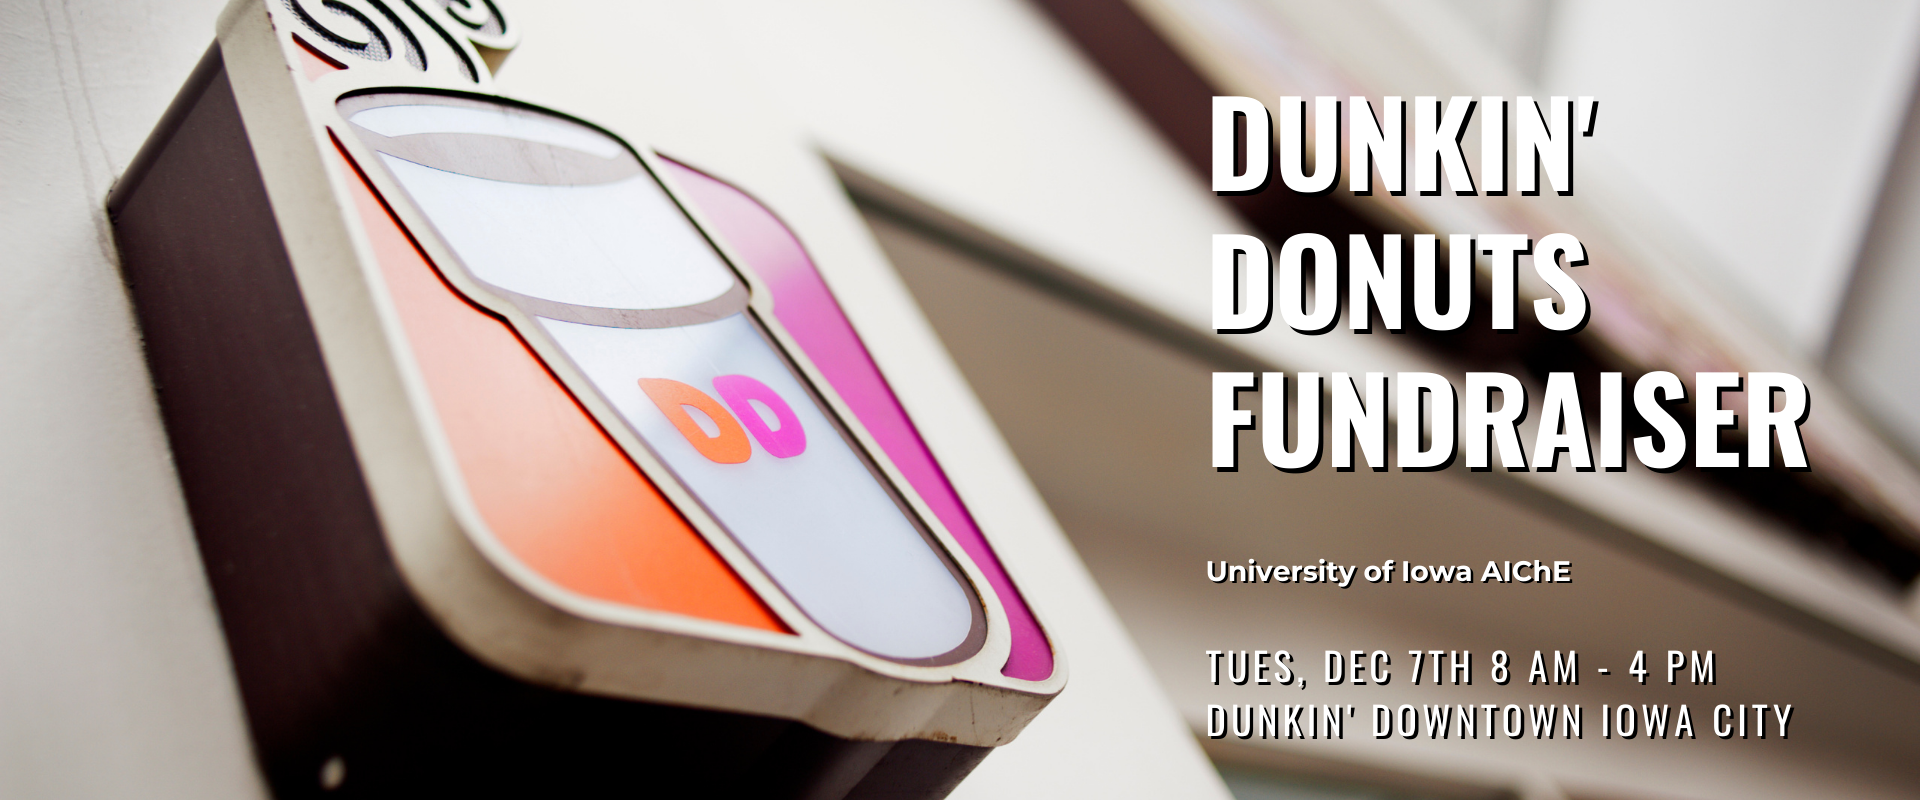 Dunkin' Donuts Fundraiser Dec. 7th: 8am-4pm